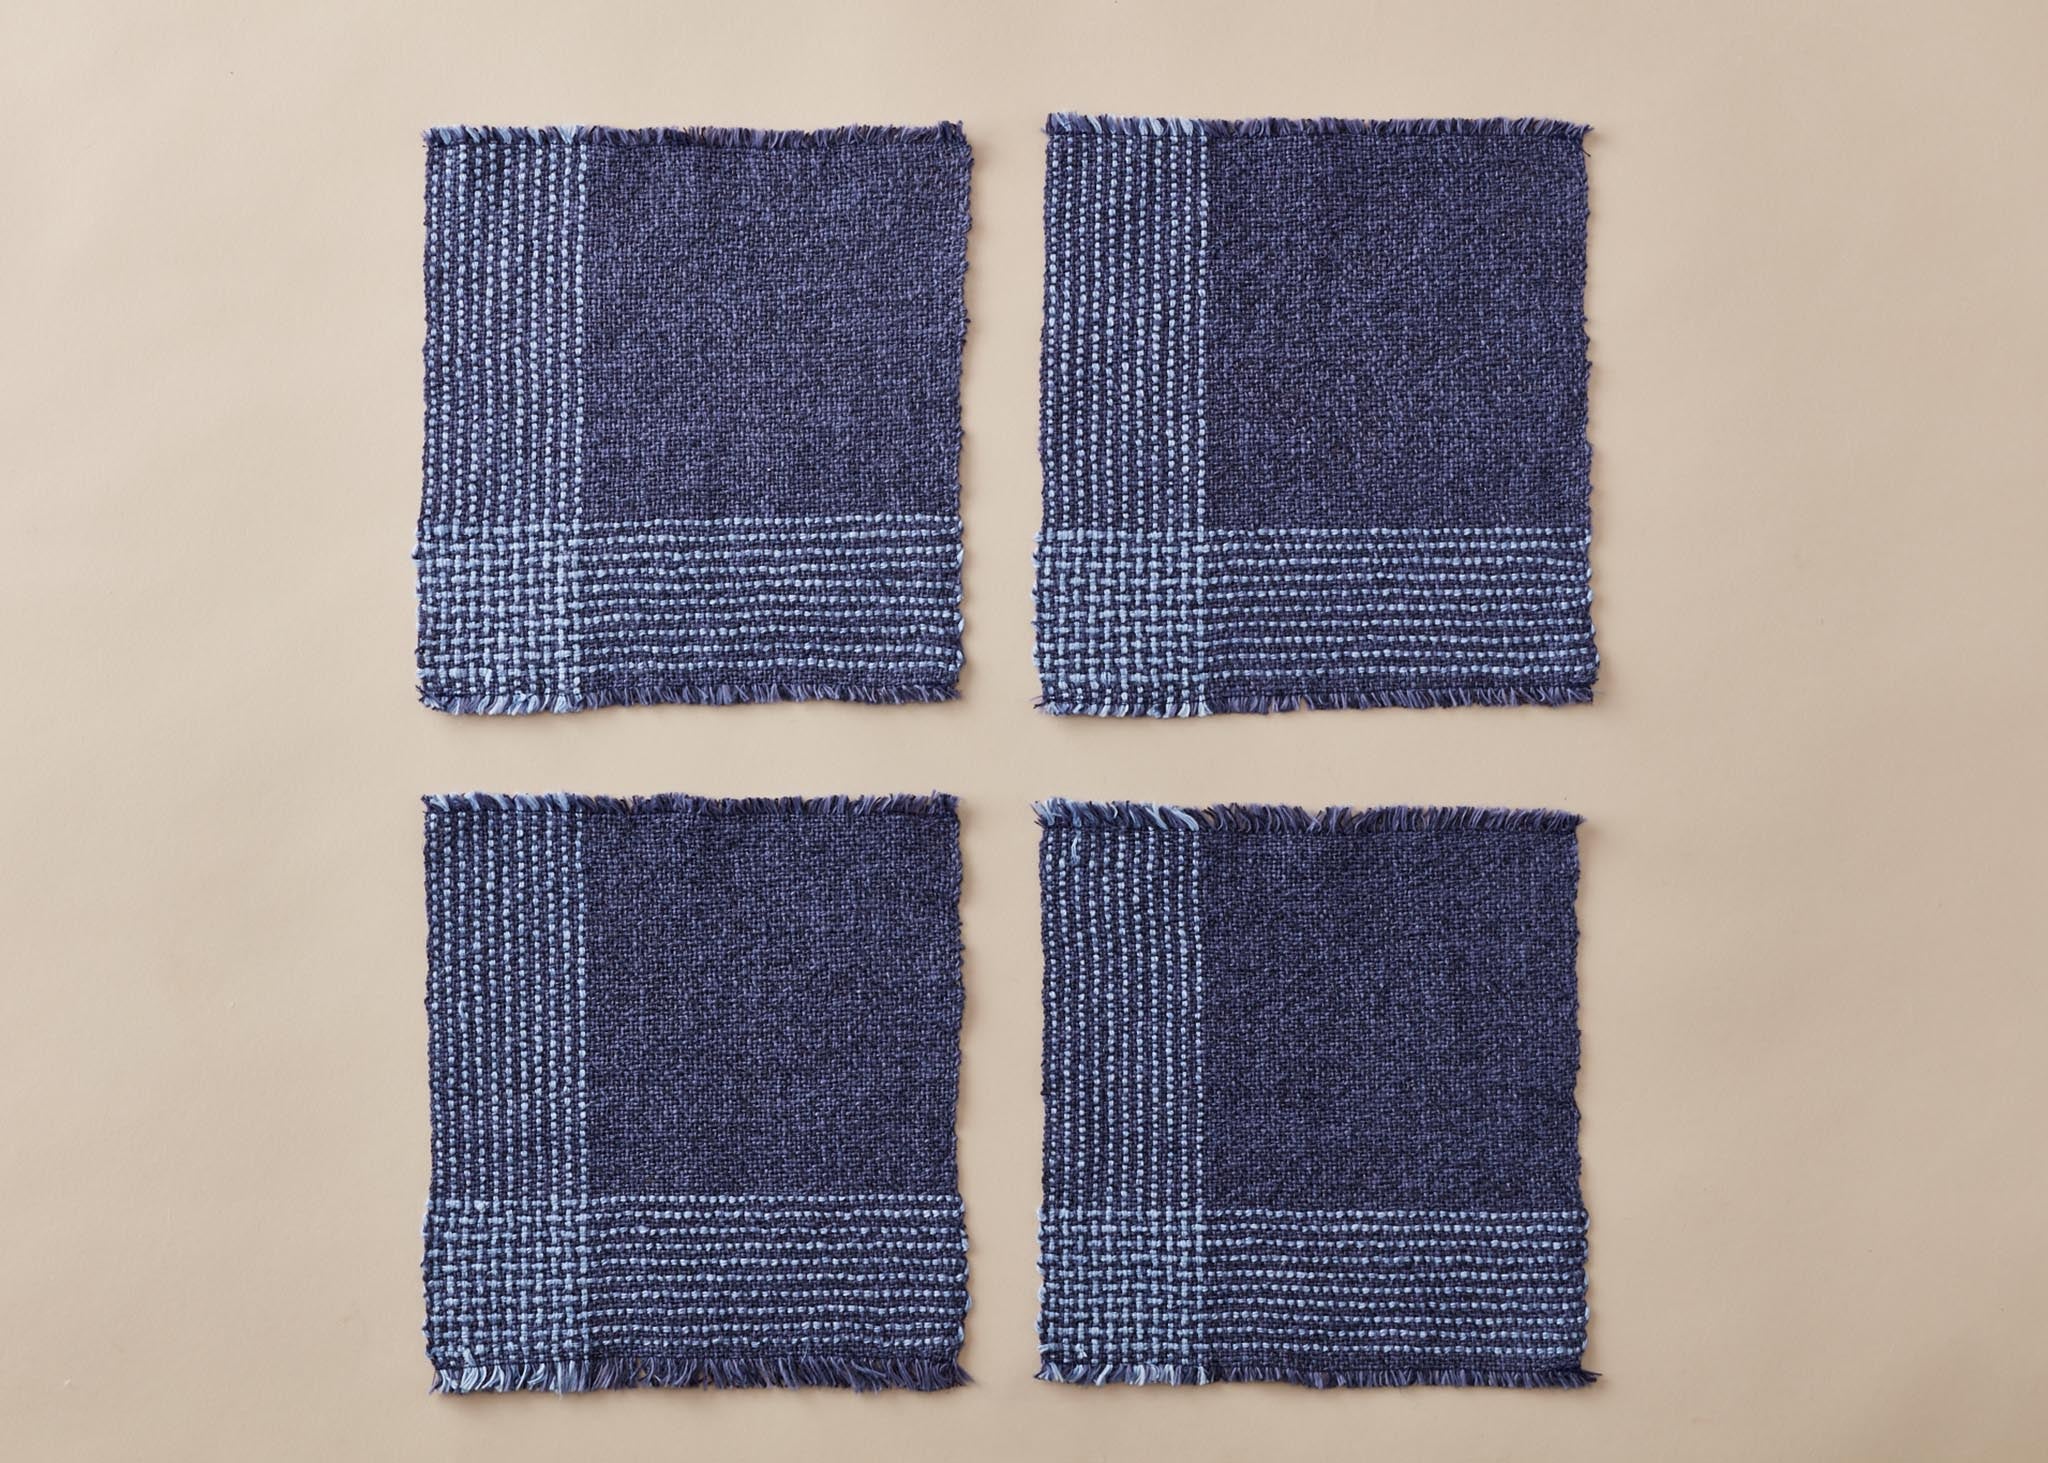 Running Stitch Napkins weaving pattern